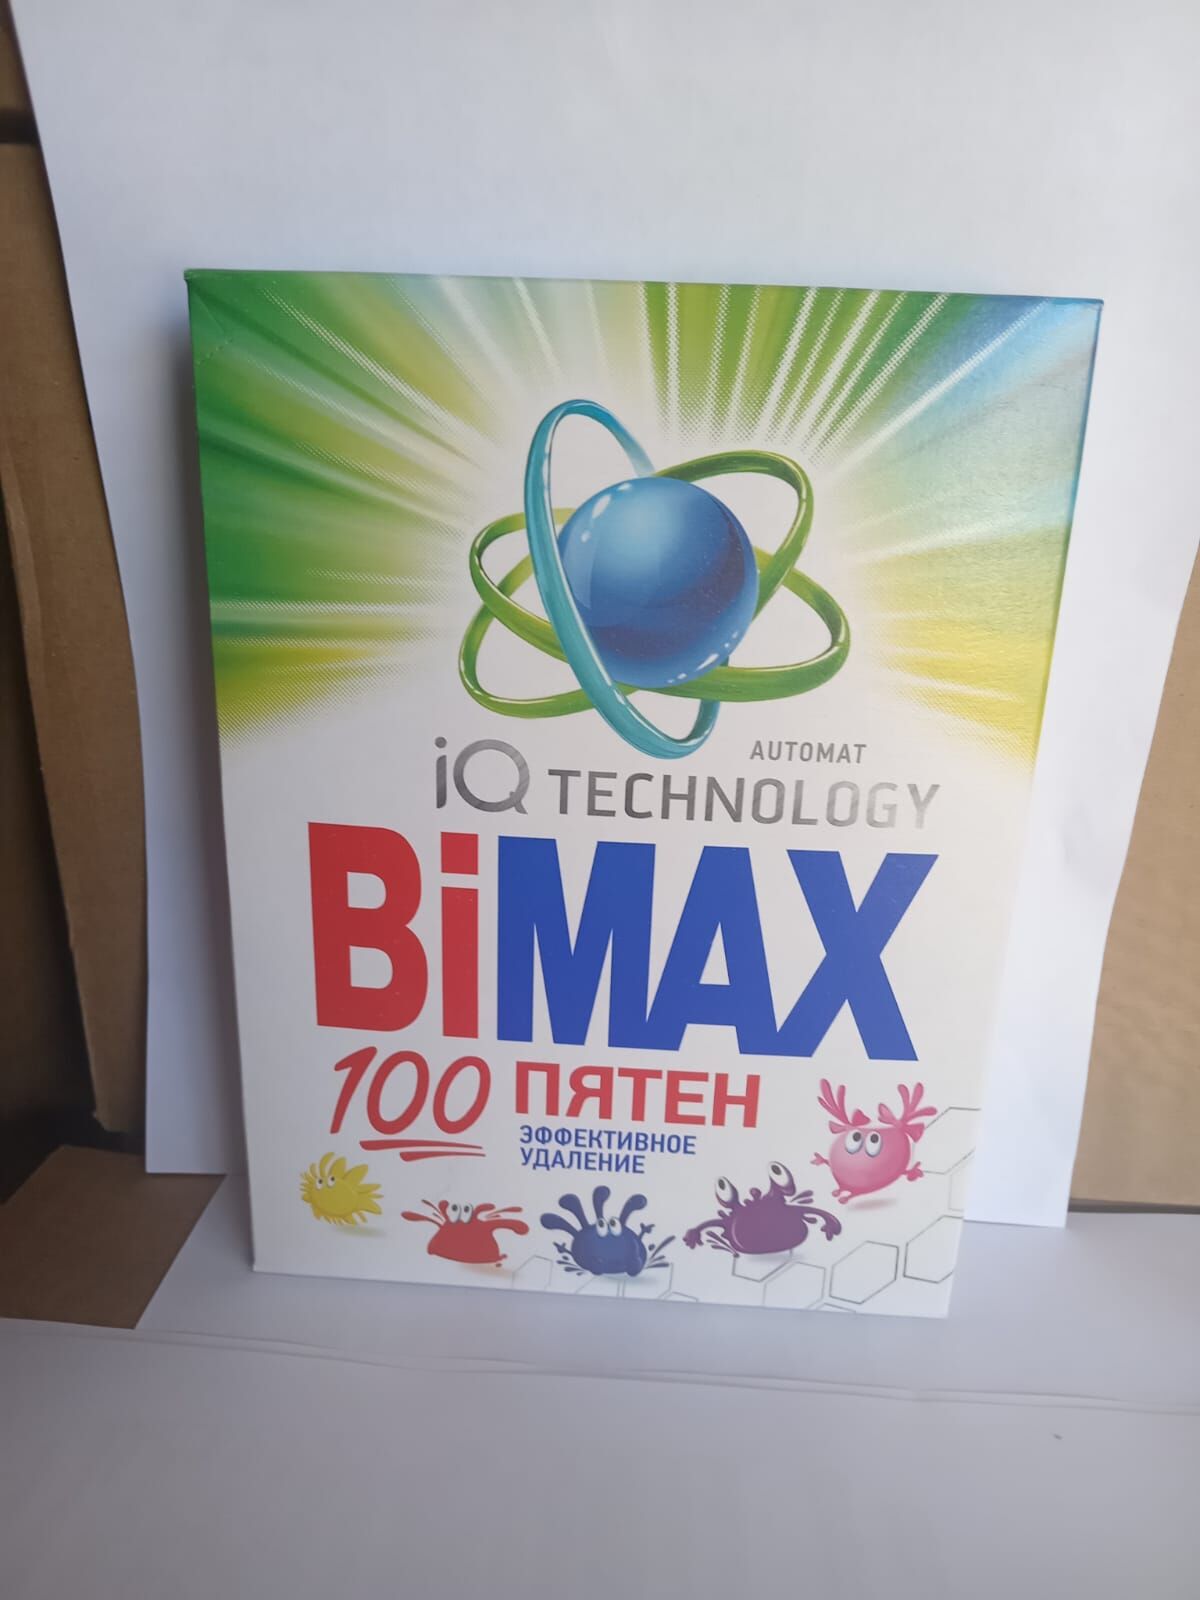 Bimax СМС Порошок 100 пятен автомат 400 гр 1/24 шт